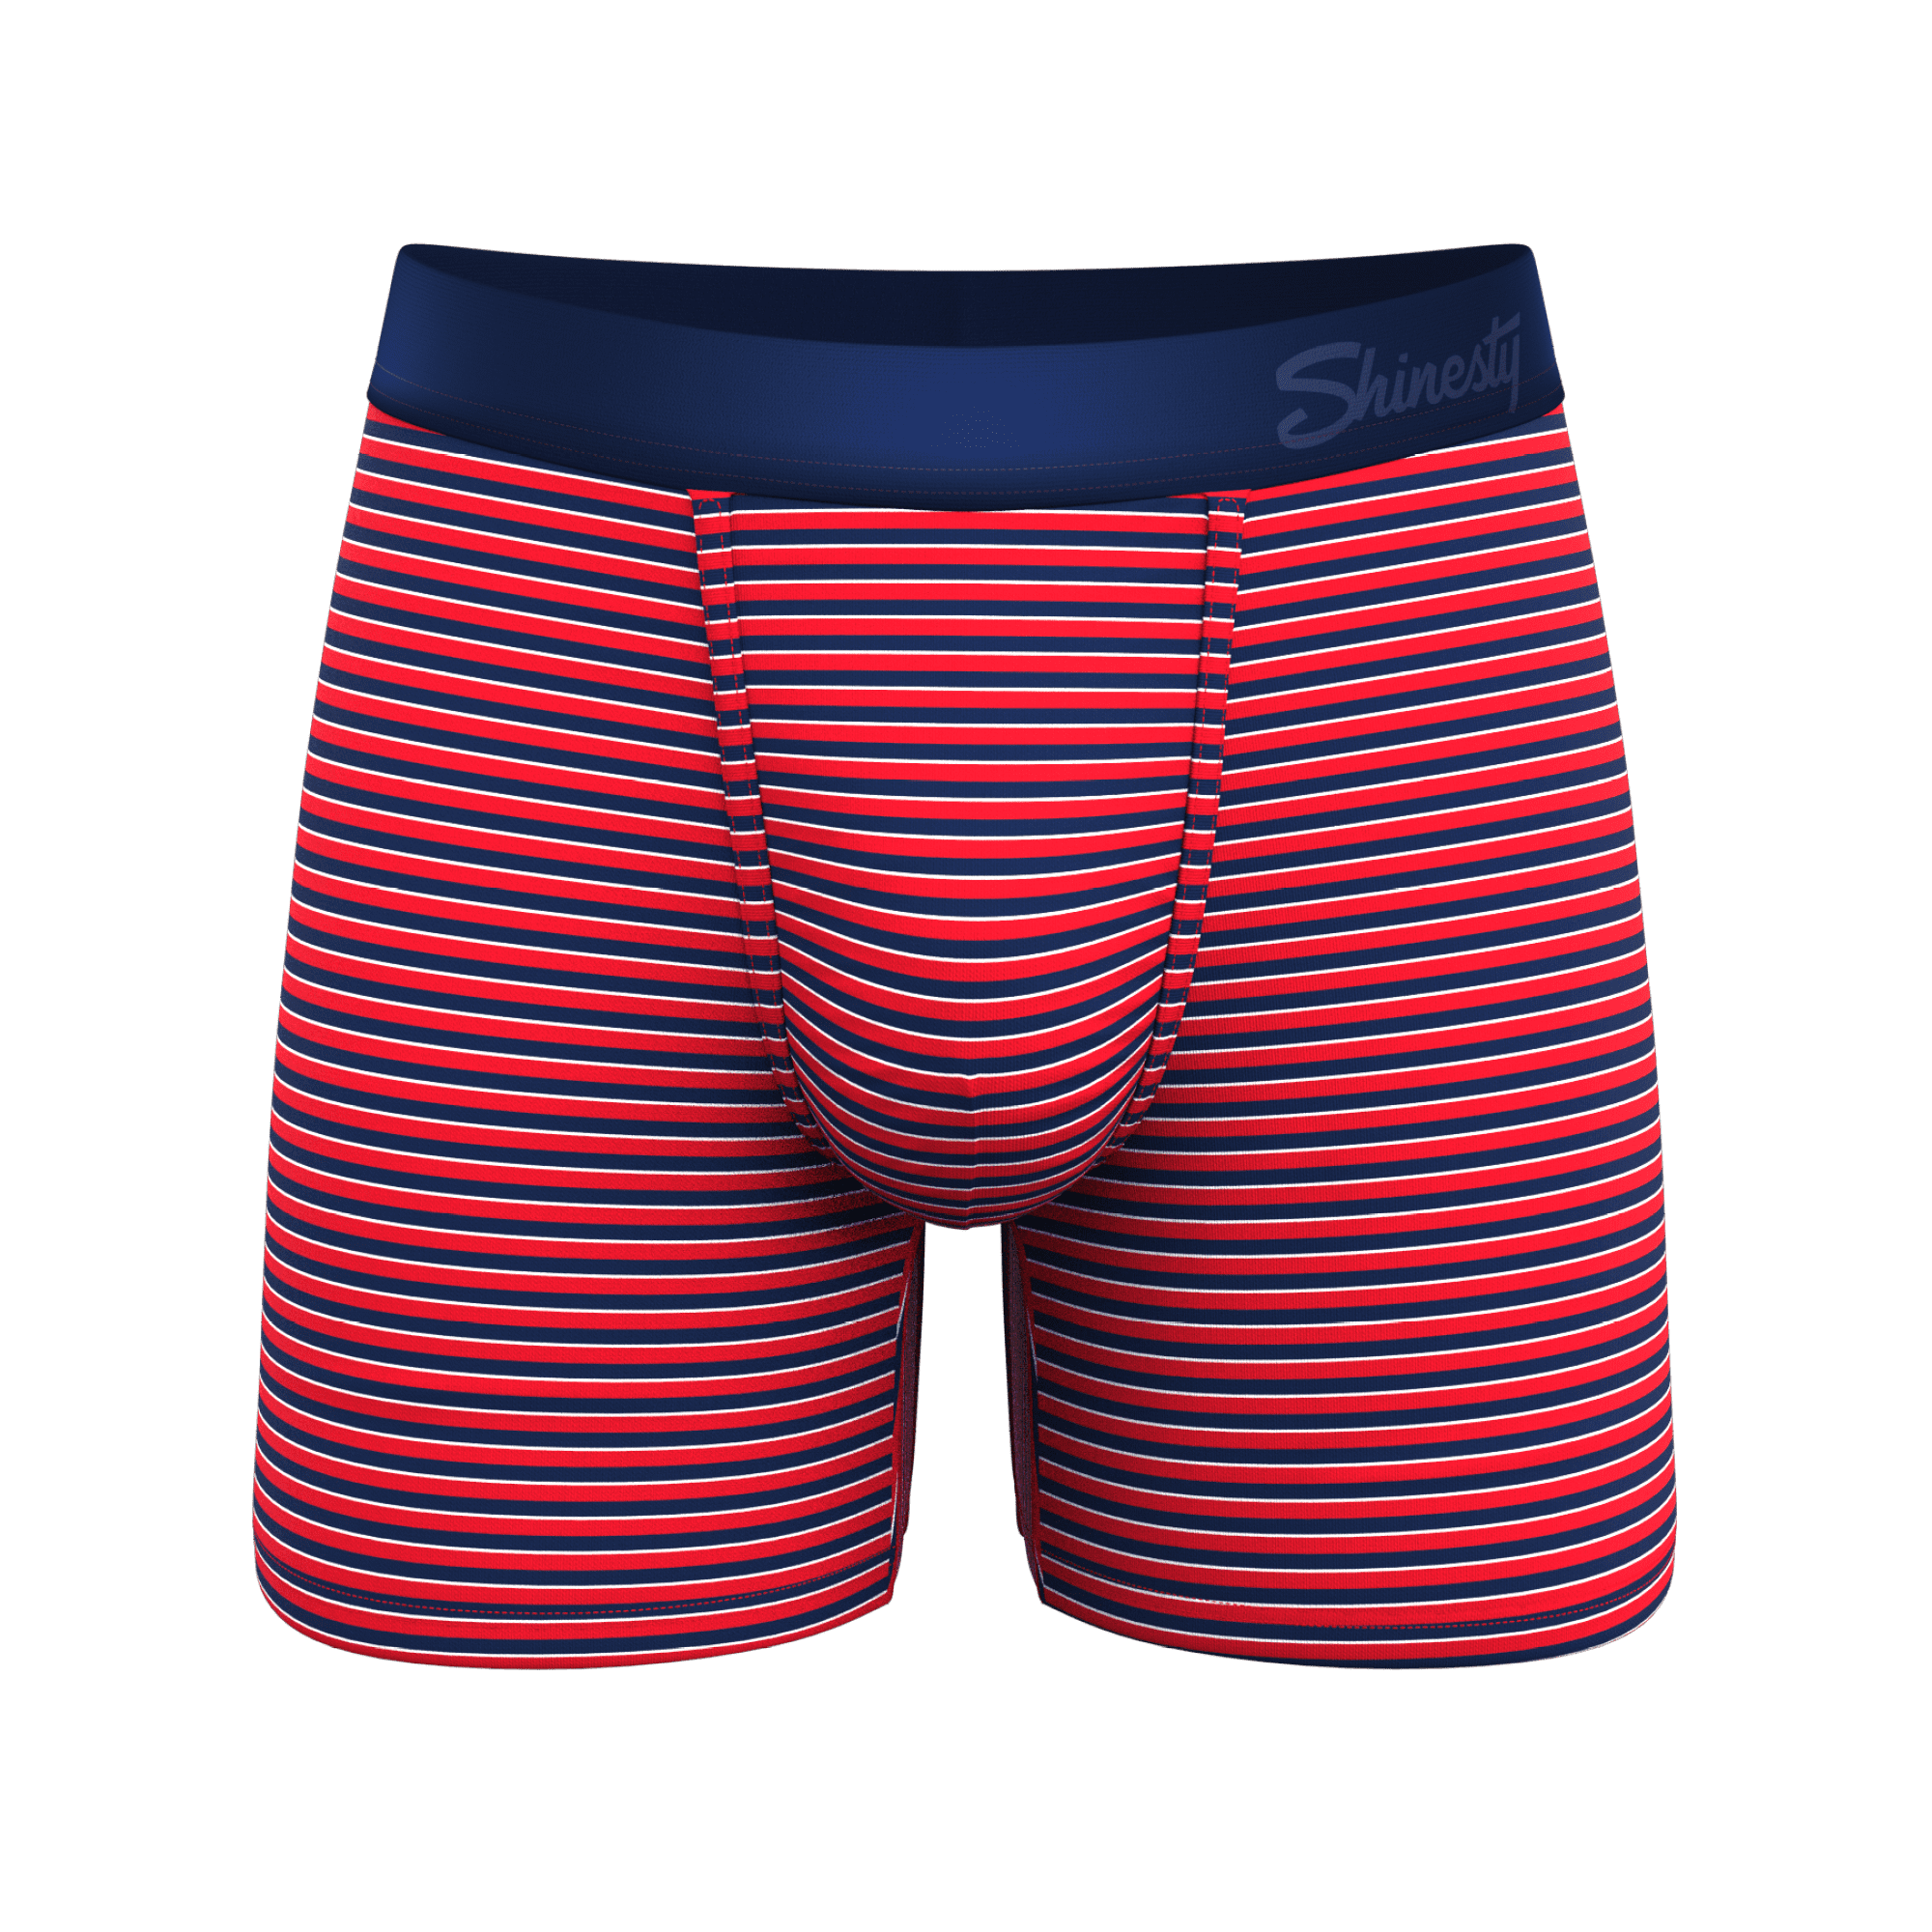 The US of A - Shinesty USA Stripe Ball Hammock Pouch Underwear Medium ...